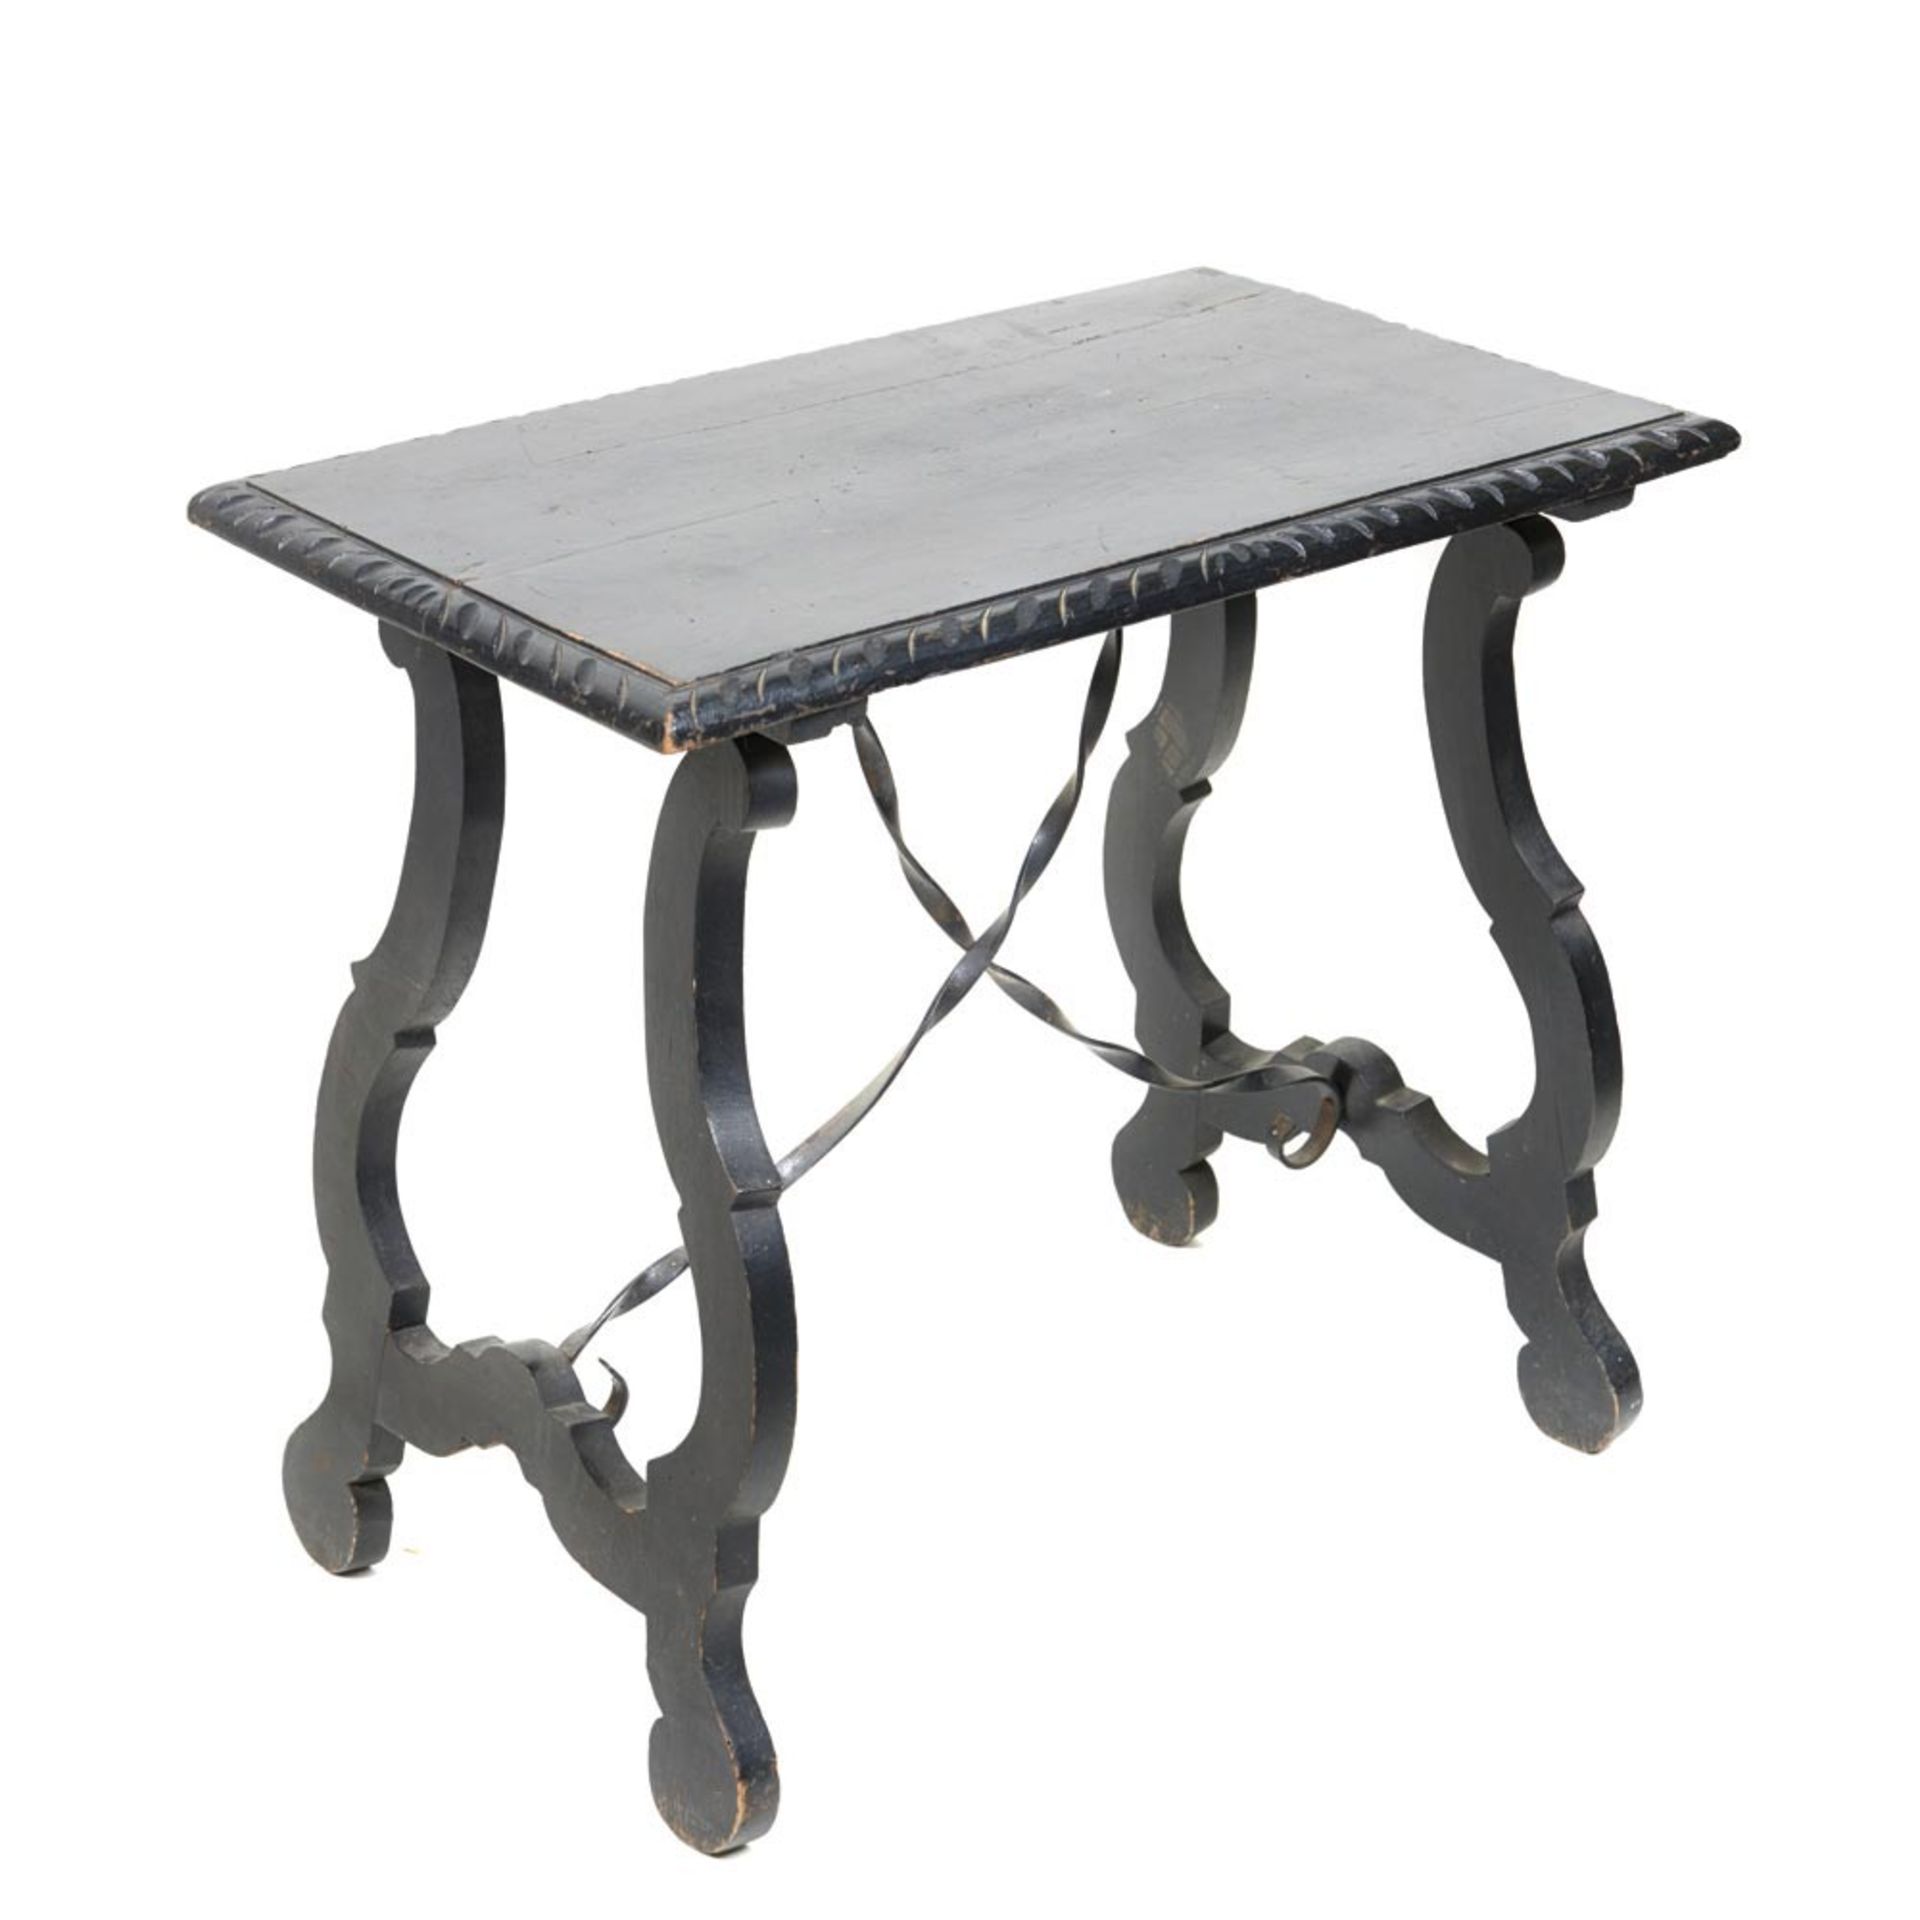 Spanish carved wood and iron table. Mesa tipo castellana en madera tallada con patas de lira - Bild 2 aus 3